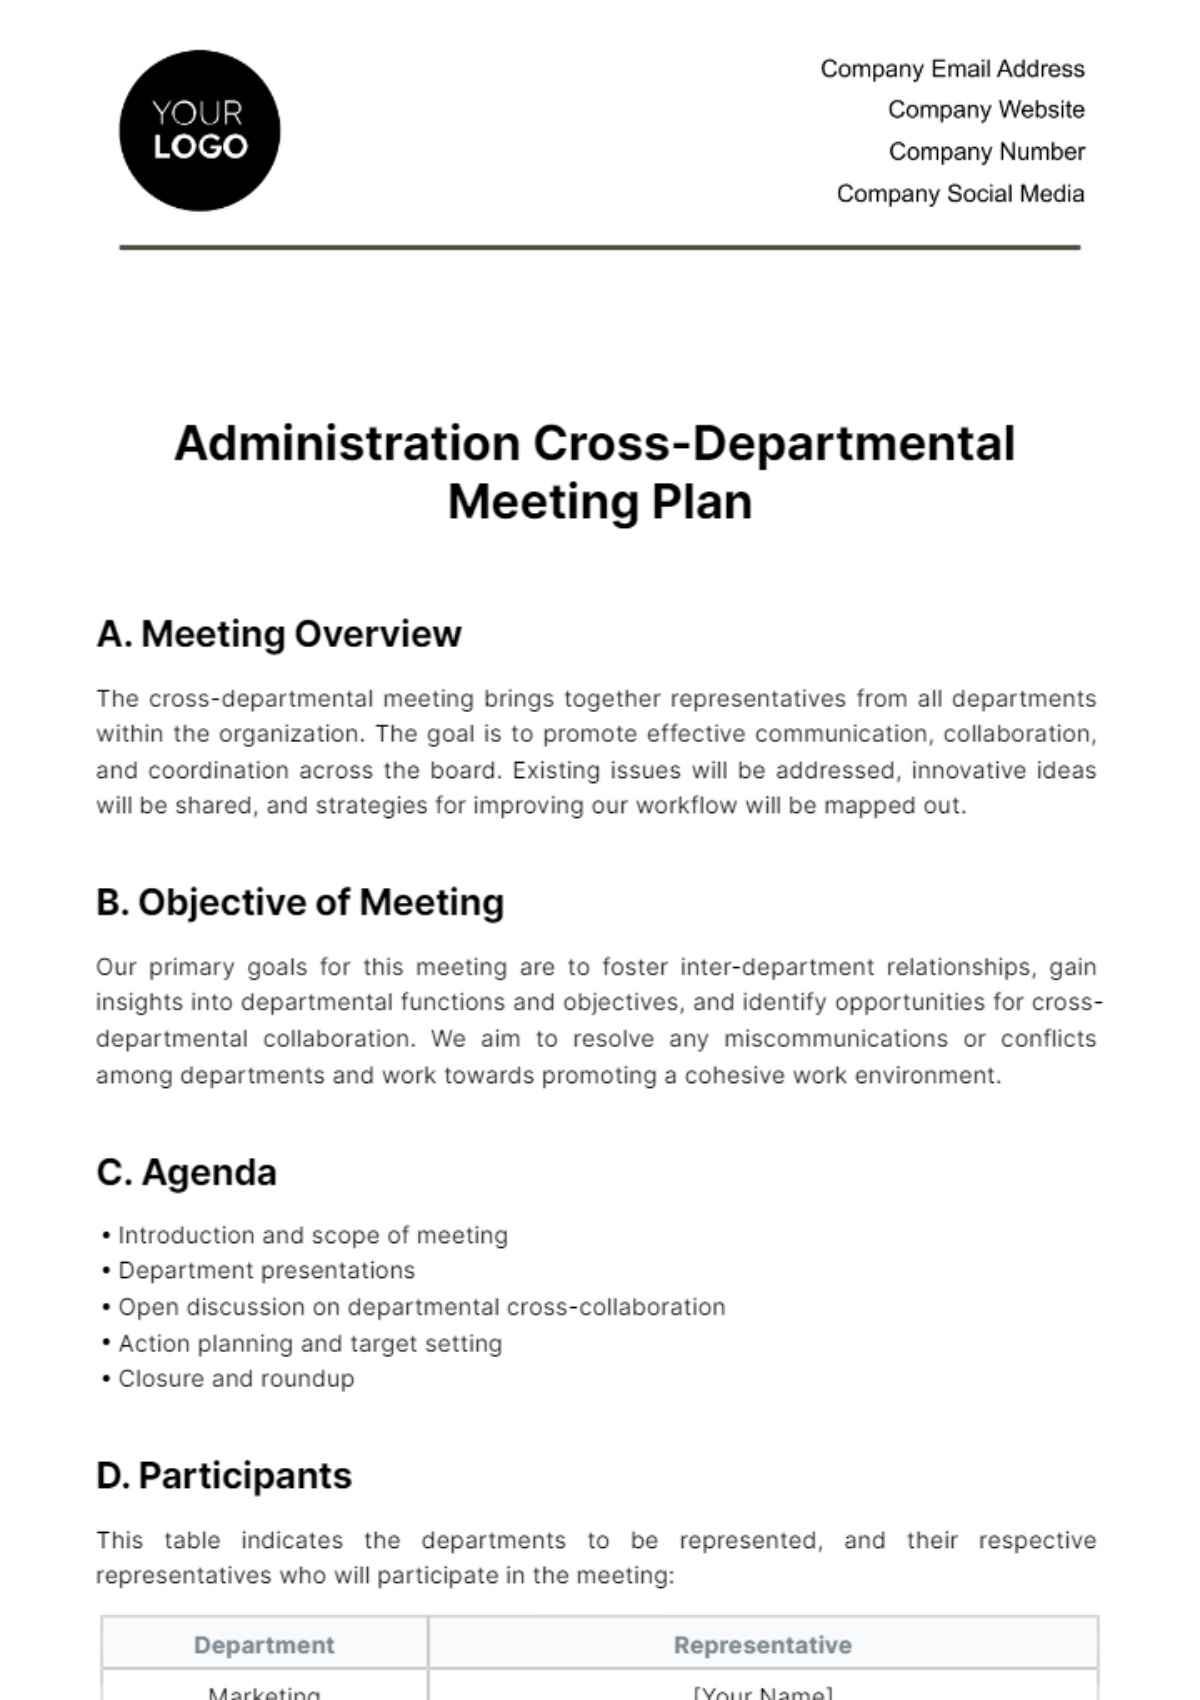 Free Administration Cross-Departmental Meeting Plan Template